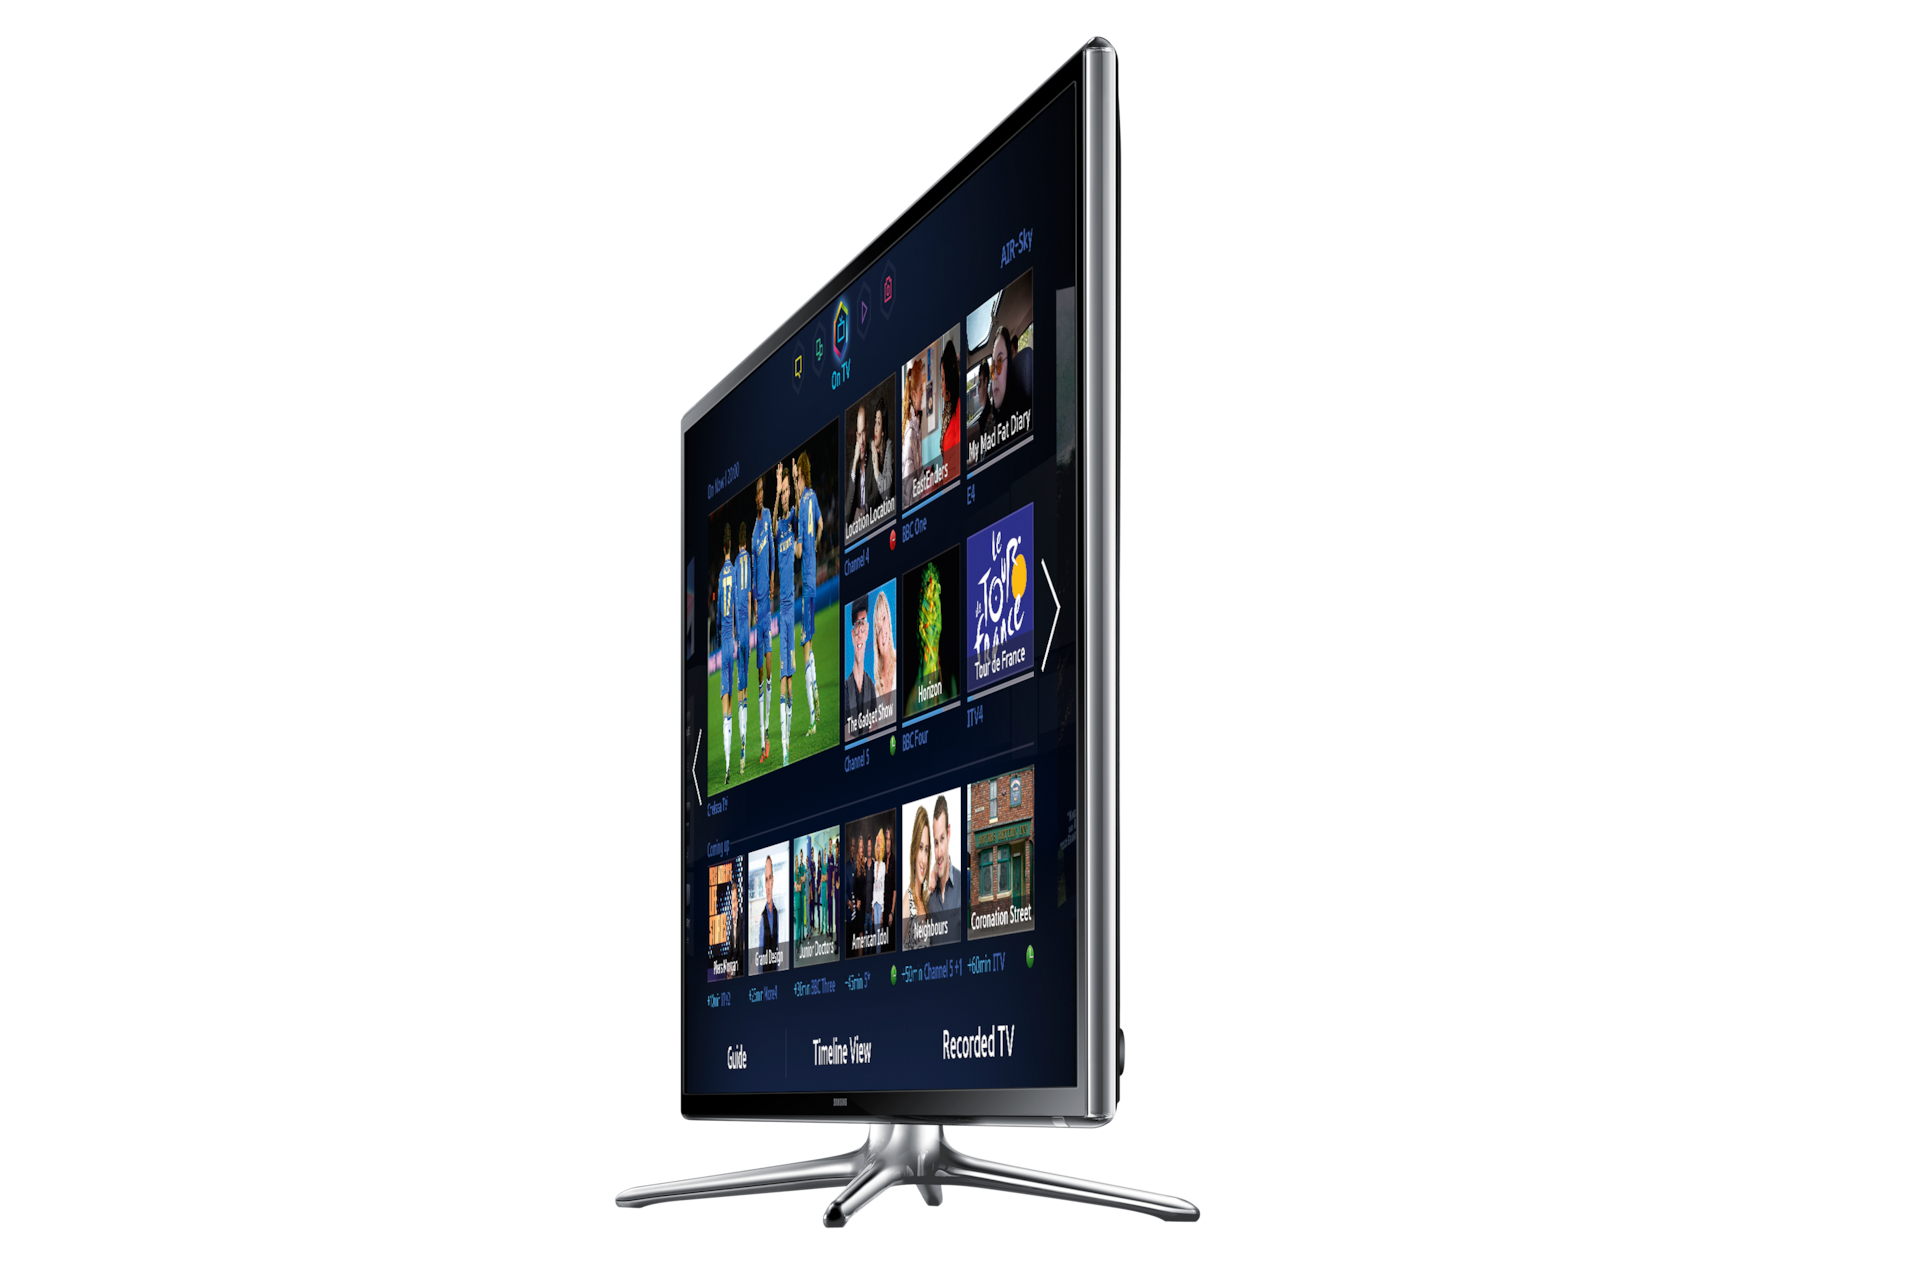 Samsung 46-Inch F6320 Series 6 Smart 3D Full HD LED TV3000 x 2000